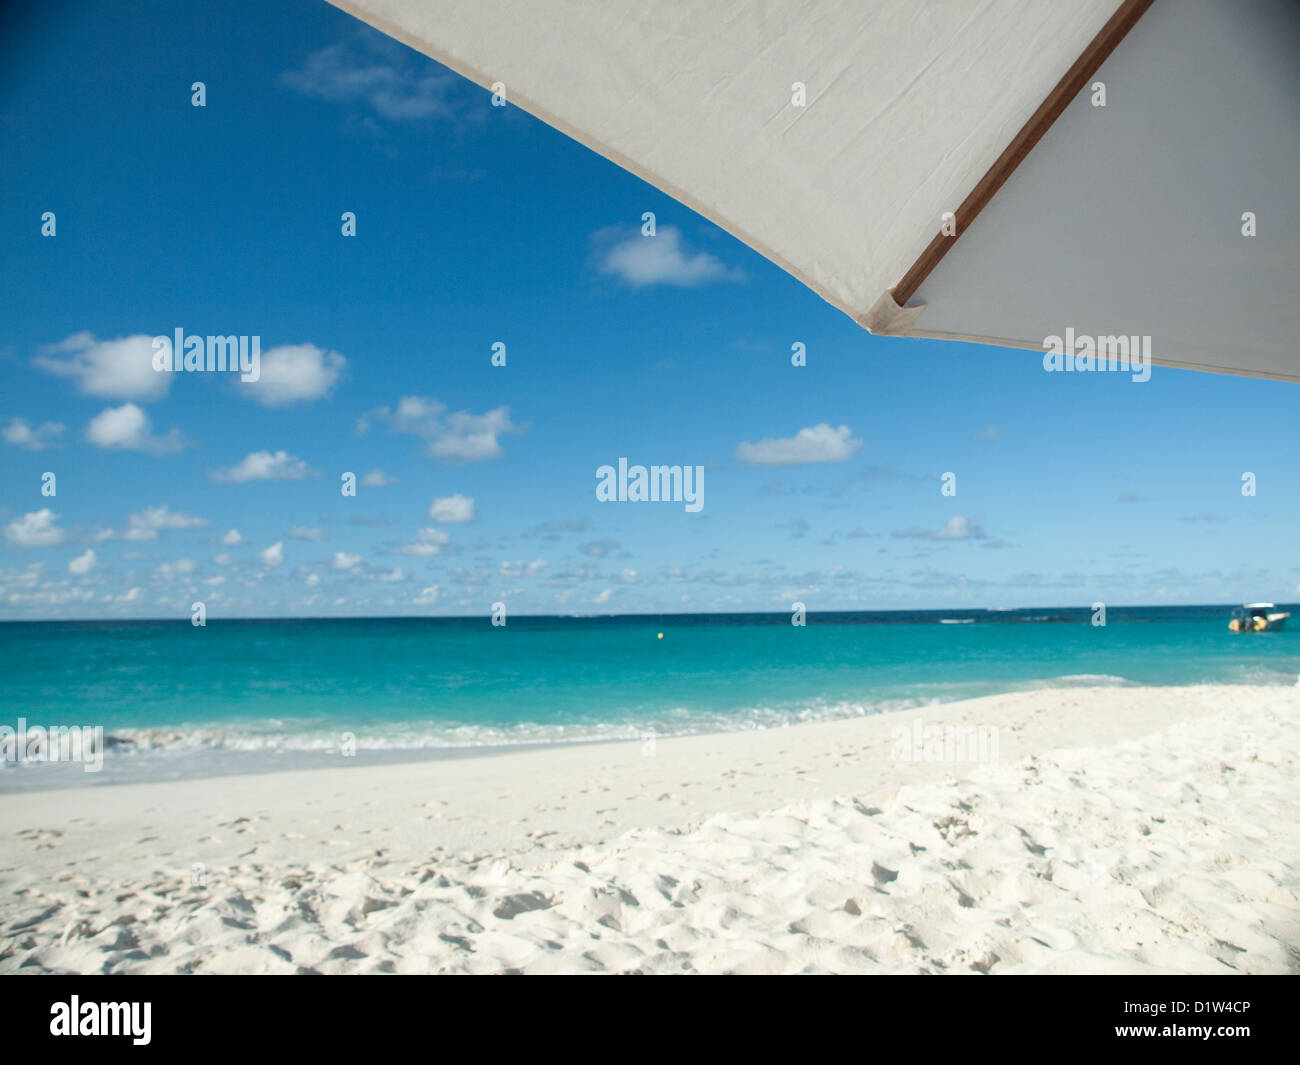 Shoal Bay beach and umbrella, Anguilla, British West Indies Stock Photo